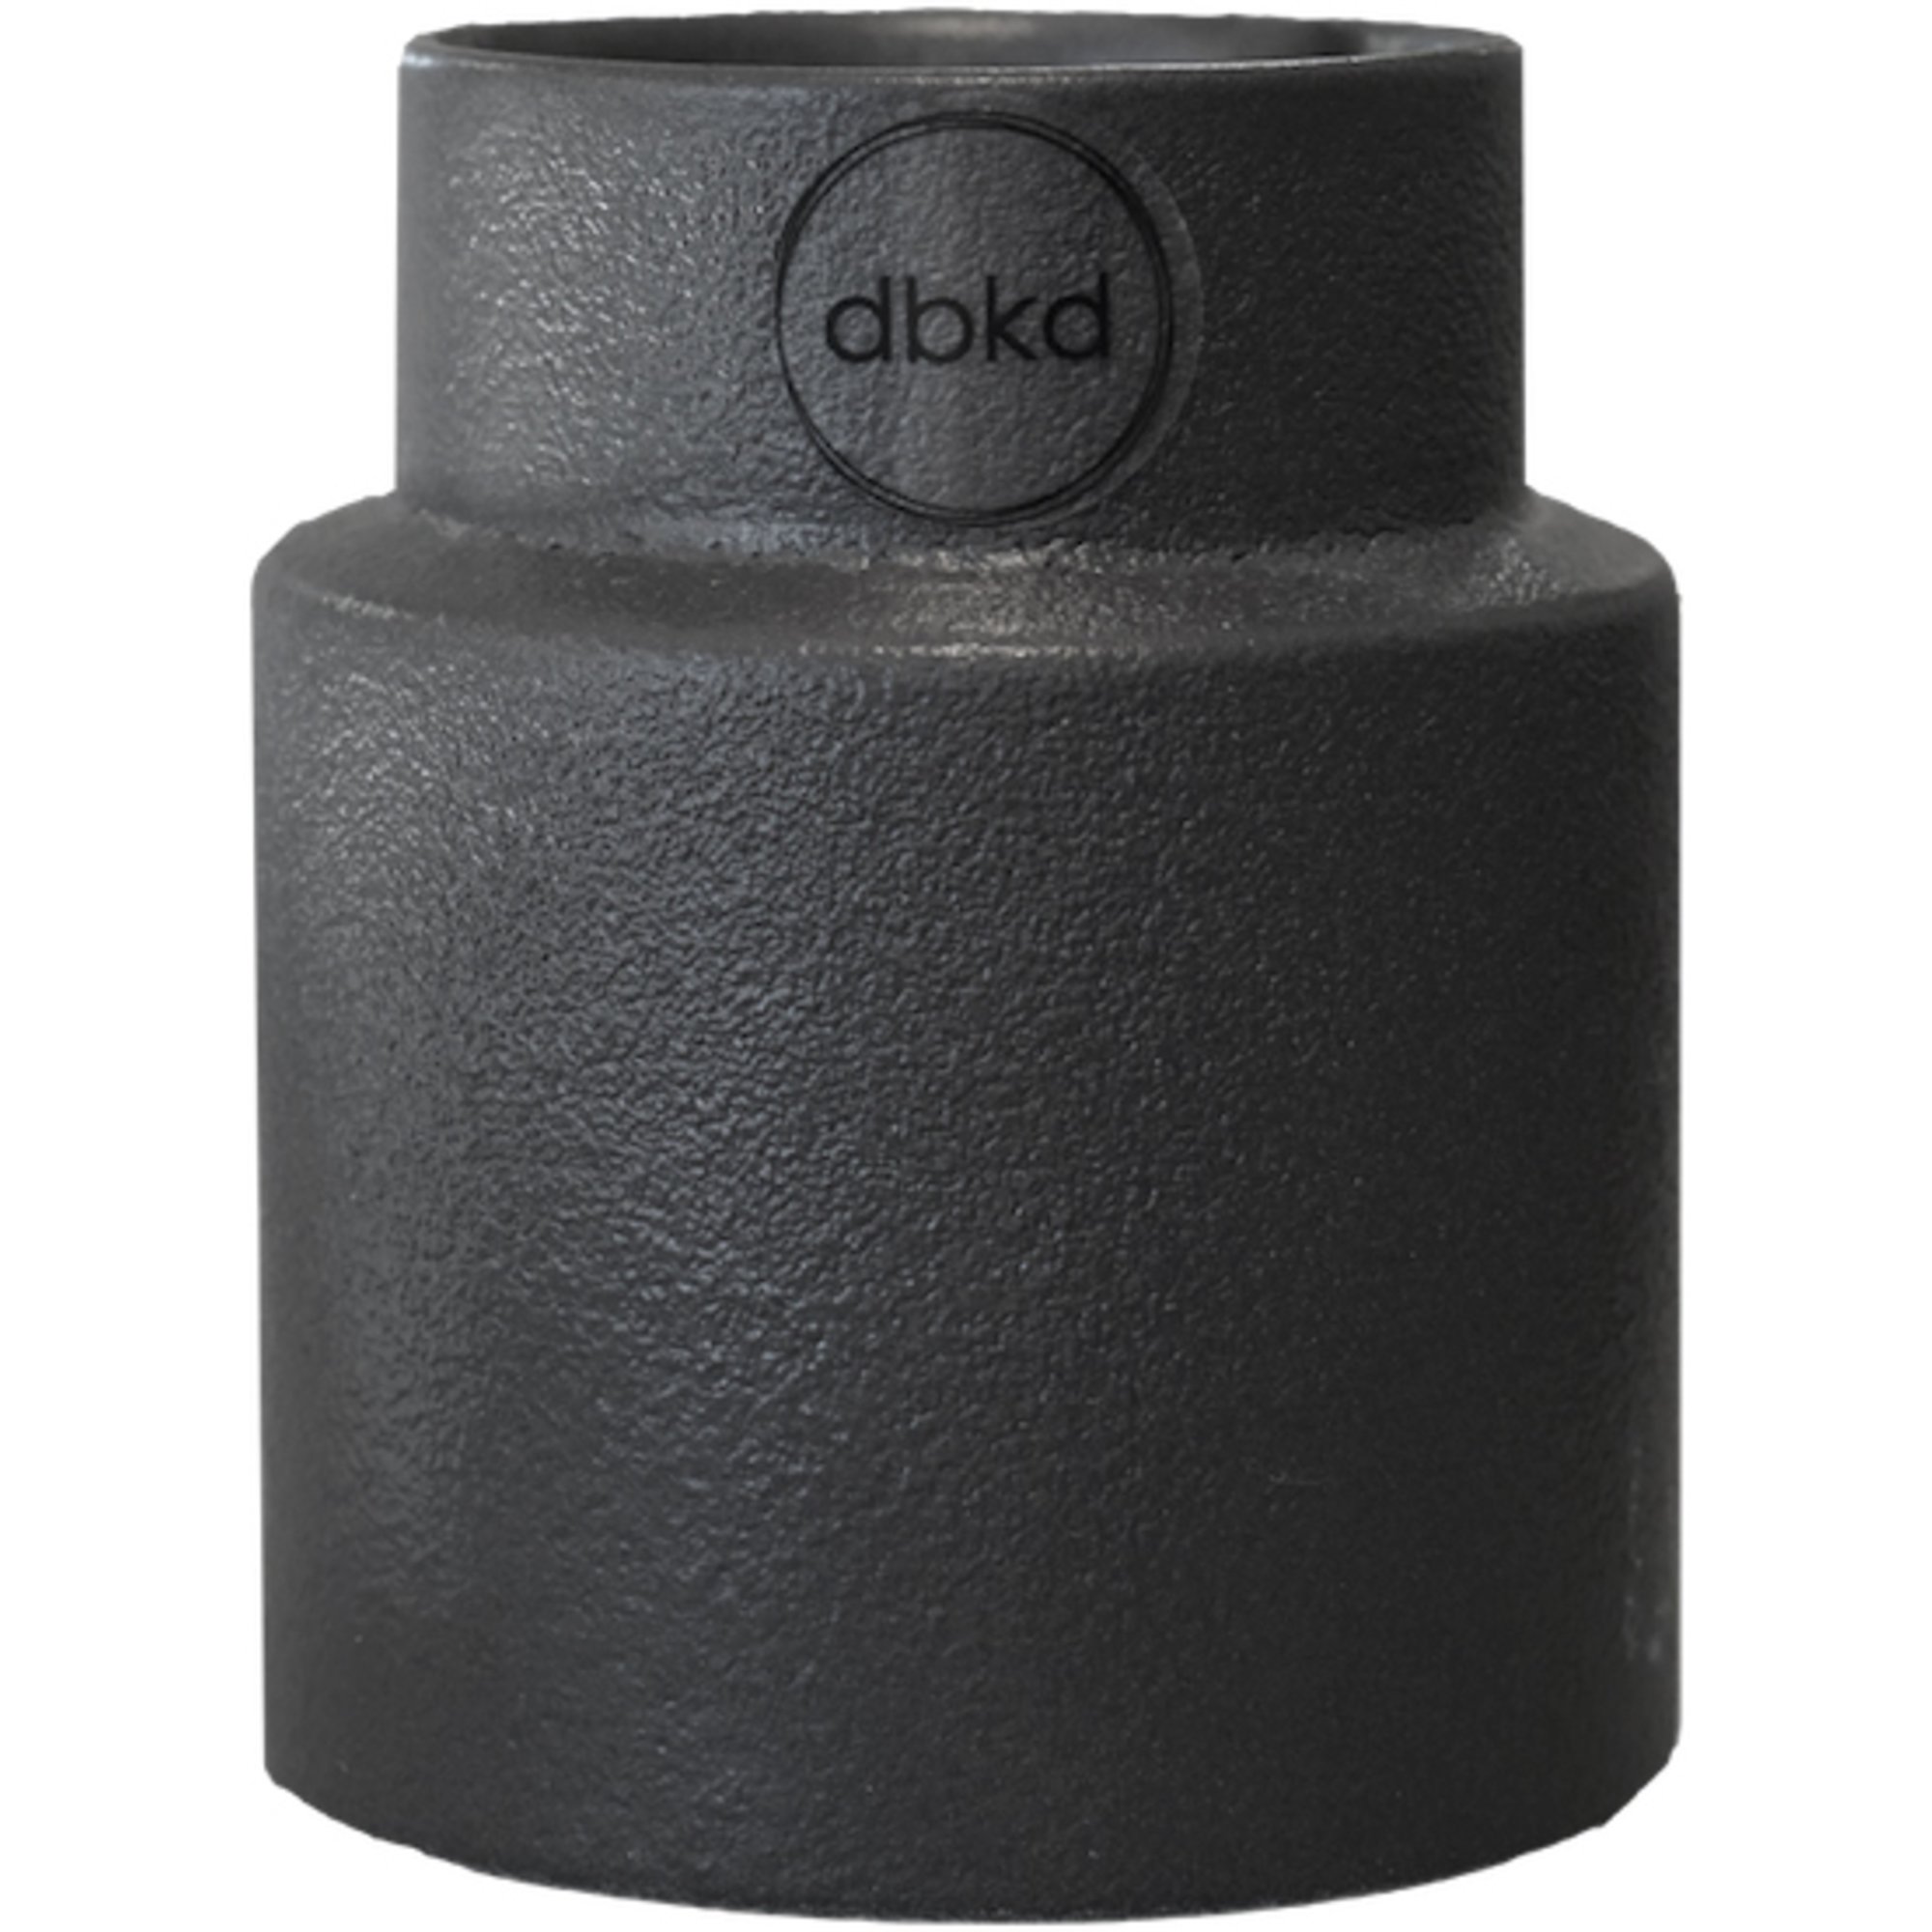 DBKD Oblong ljushållare, small, cast iron